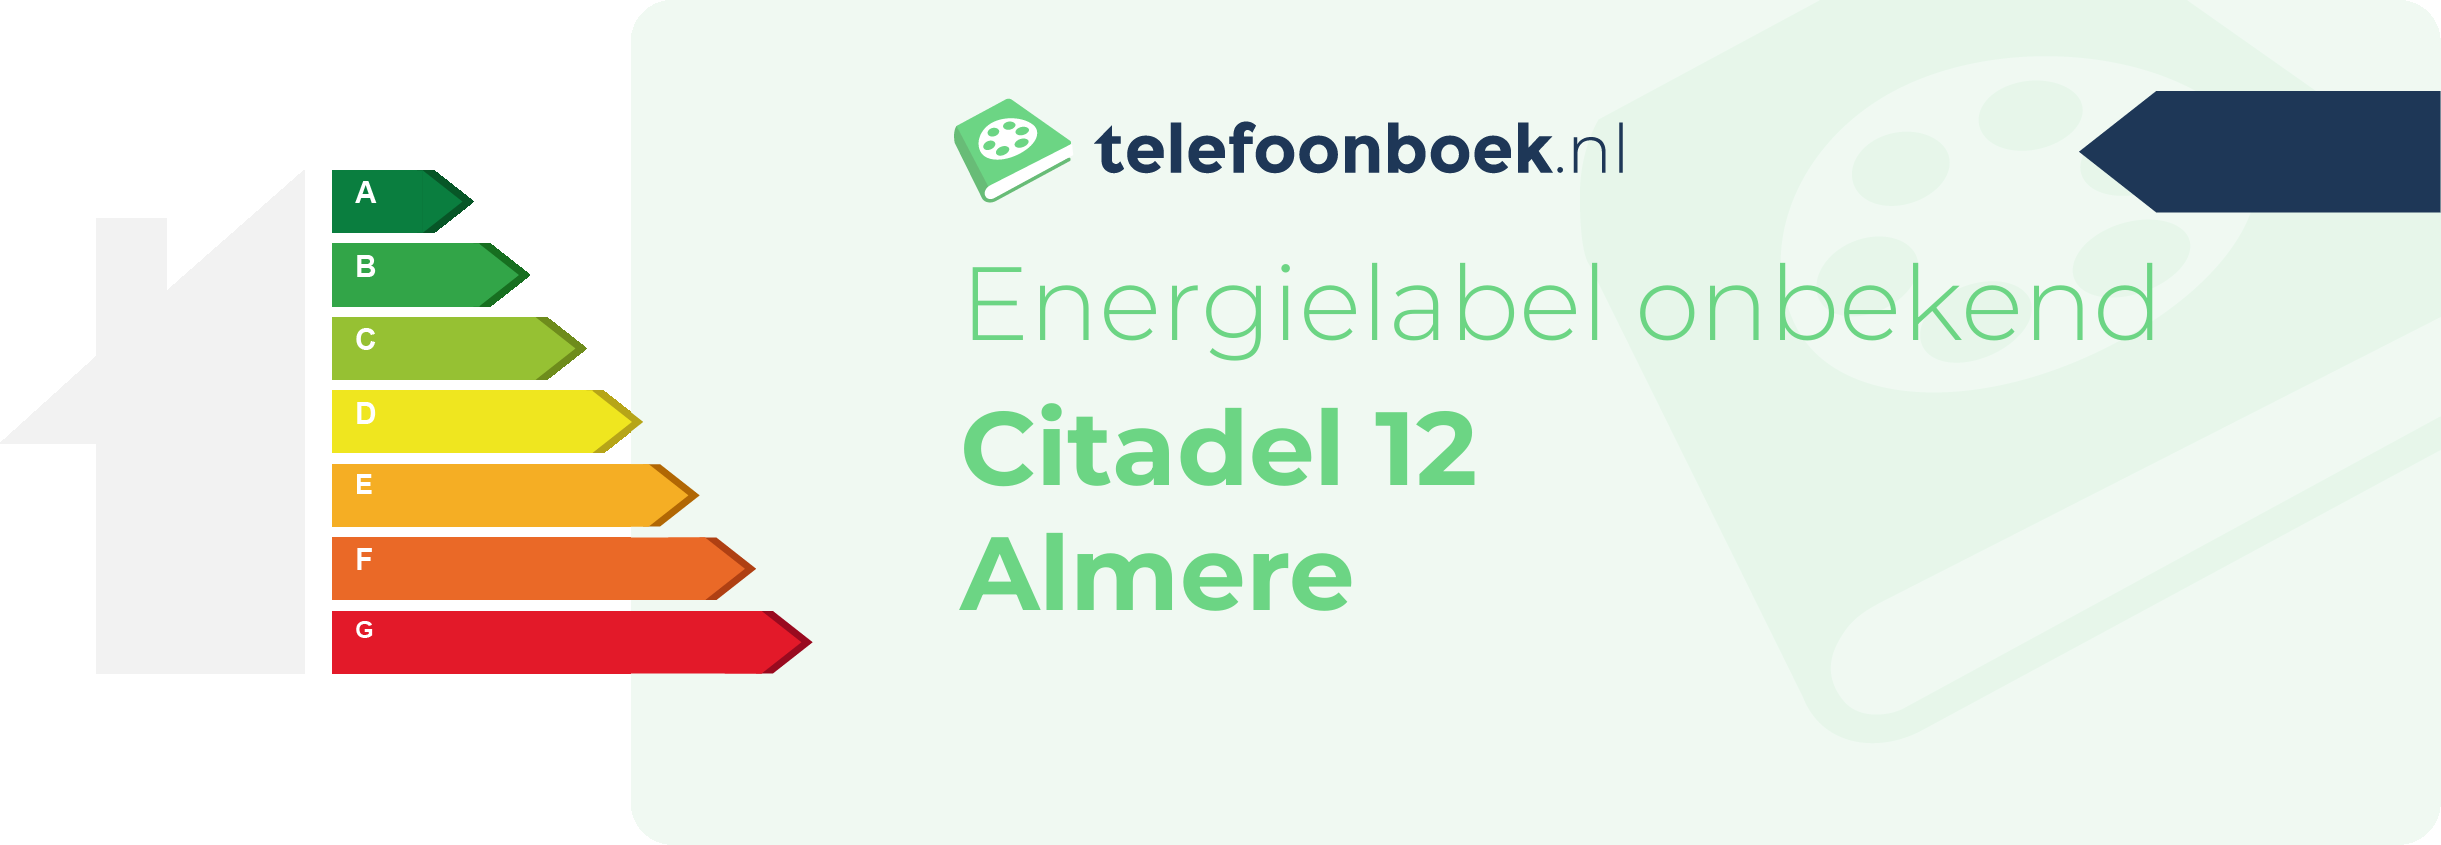 Energielabel Citadel 12 Almere